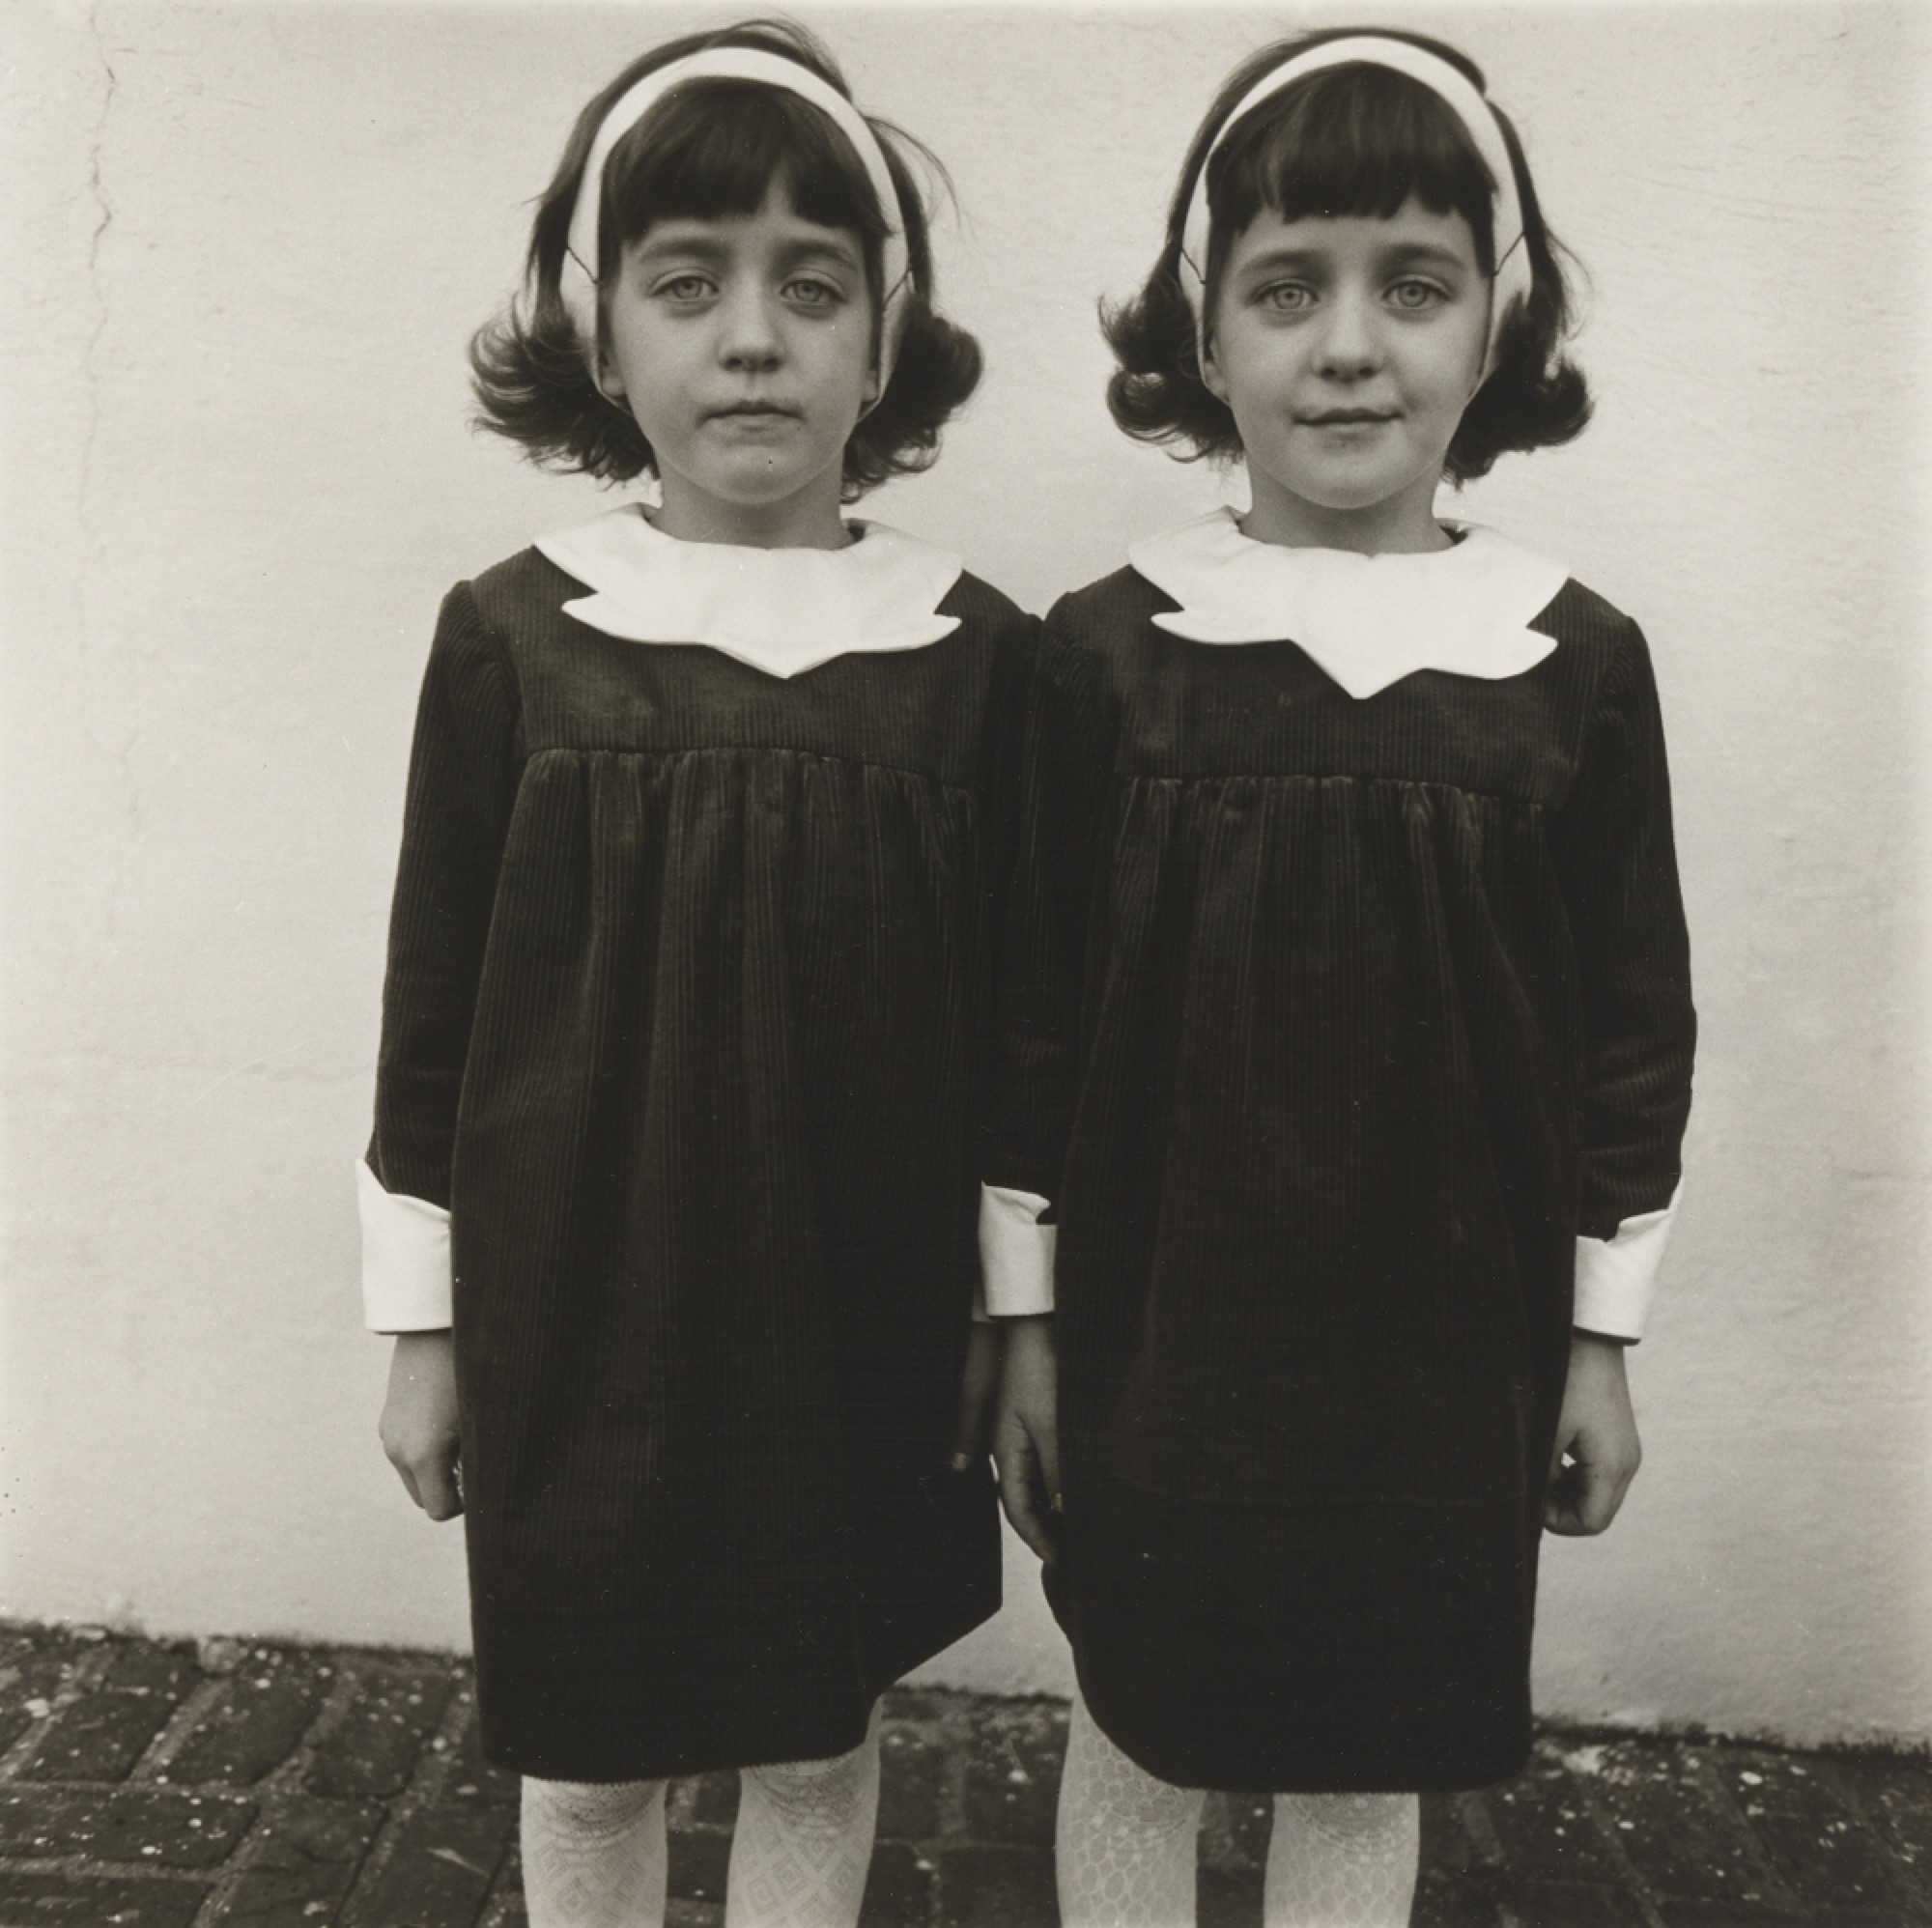 Diane Arbus, <em>Identical twins, Roselle, N.J., 1966,</em> 1966, gelatin silver photograph, National Gallery of Australia, Canberra, Purchased 1980.